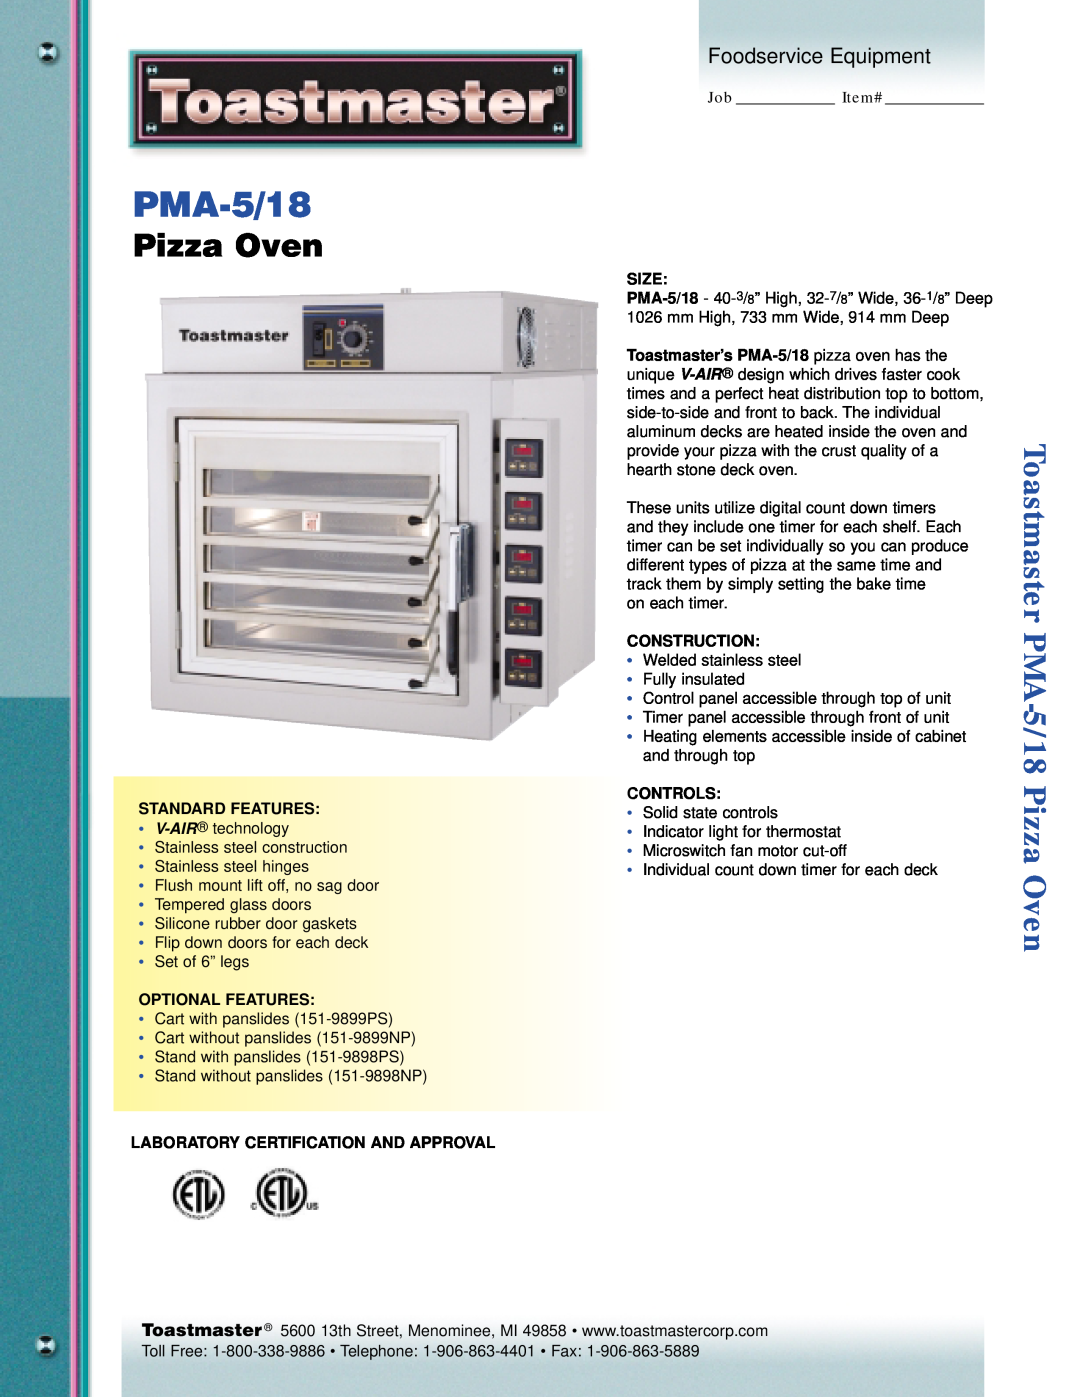 Toastmaster PMA-18 manual Toastmaster PMA-5/18Pizza Oven, Foodservice Equipment 